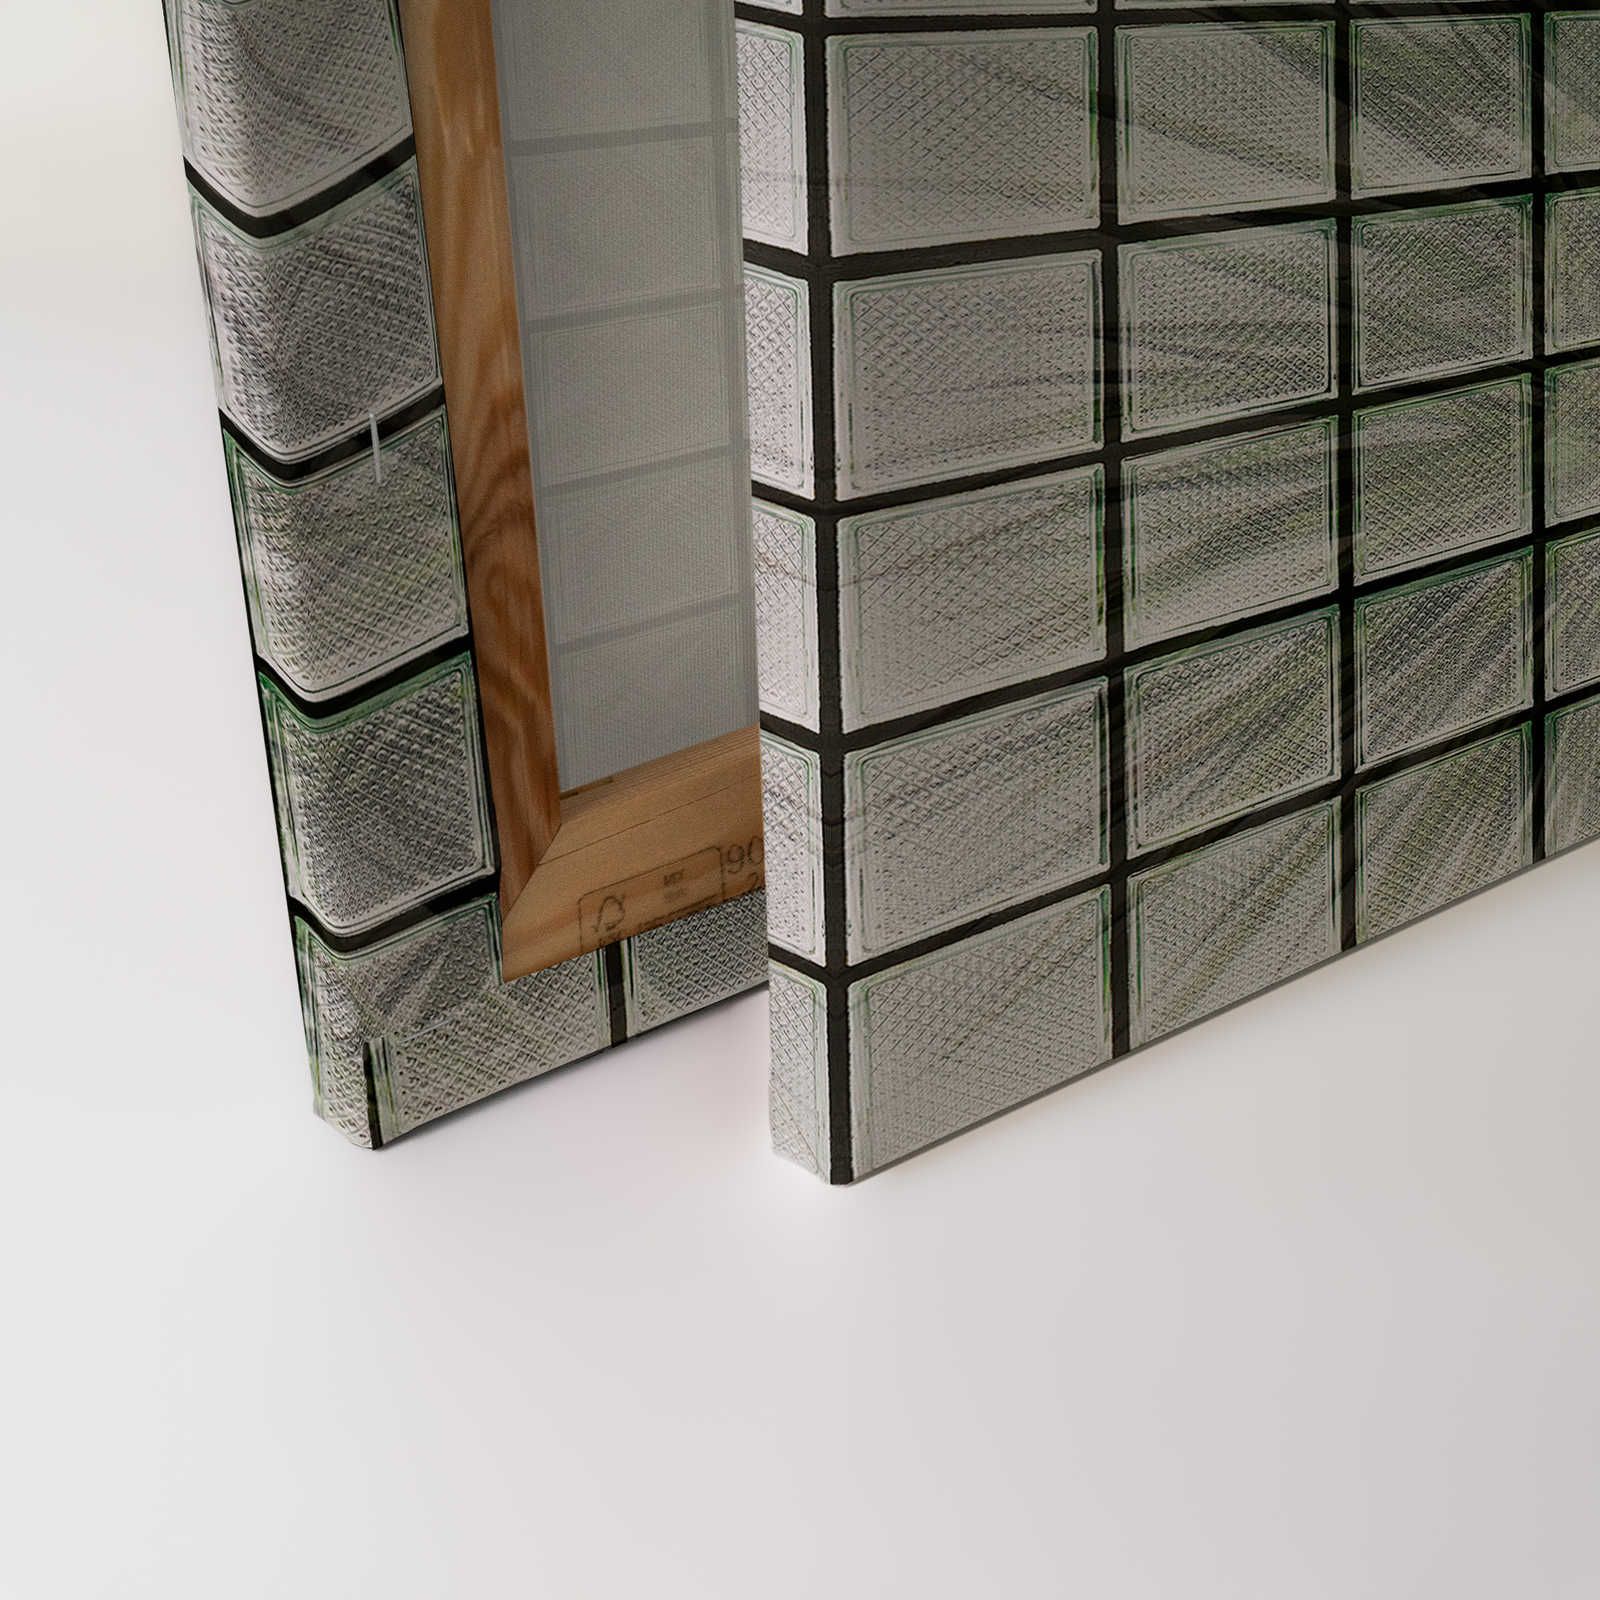             Green House 1 - Leinwandbild Palmen & Glasbausteine – 0,90 m x 0,60 m
        